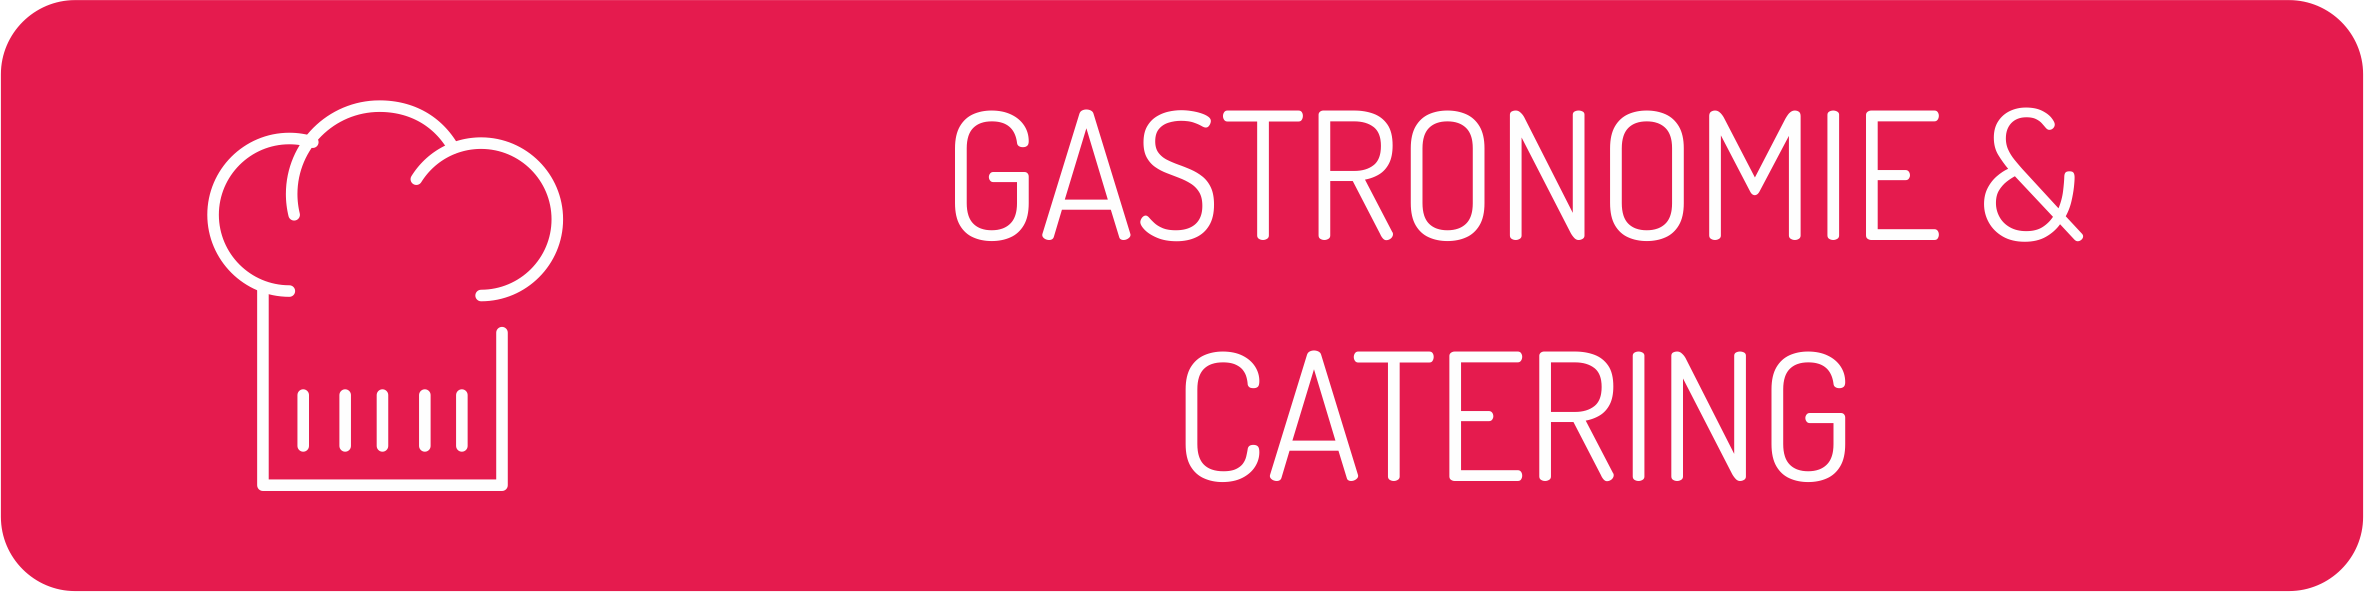 Gastronomie - Catering